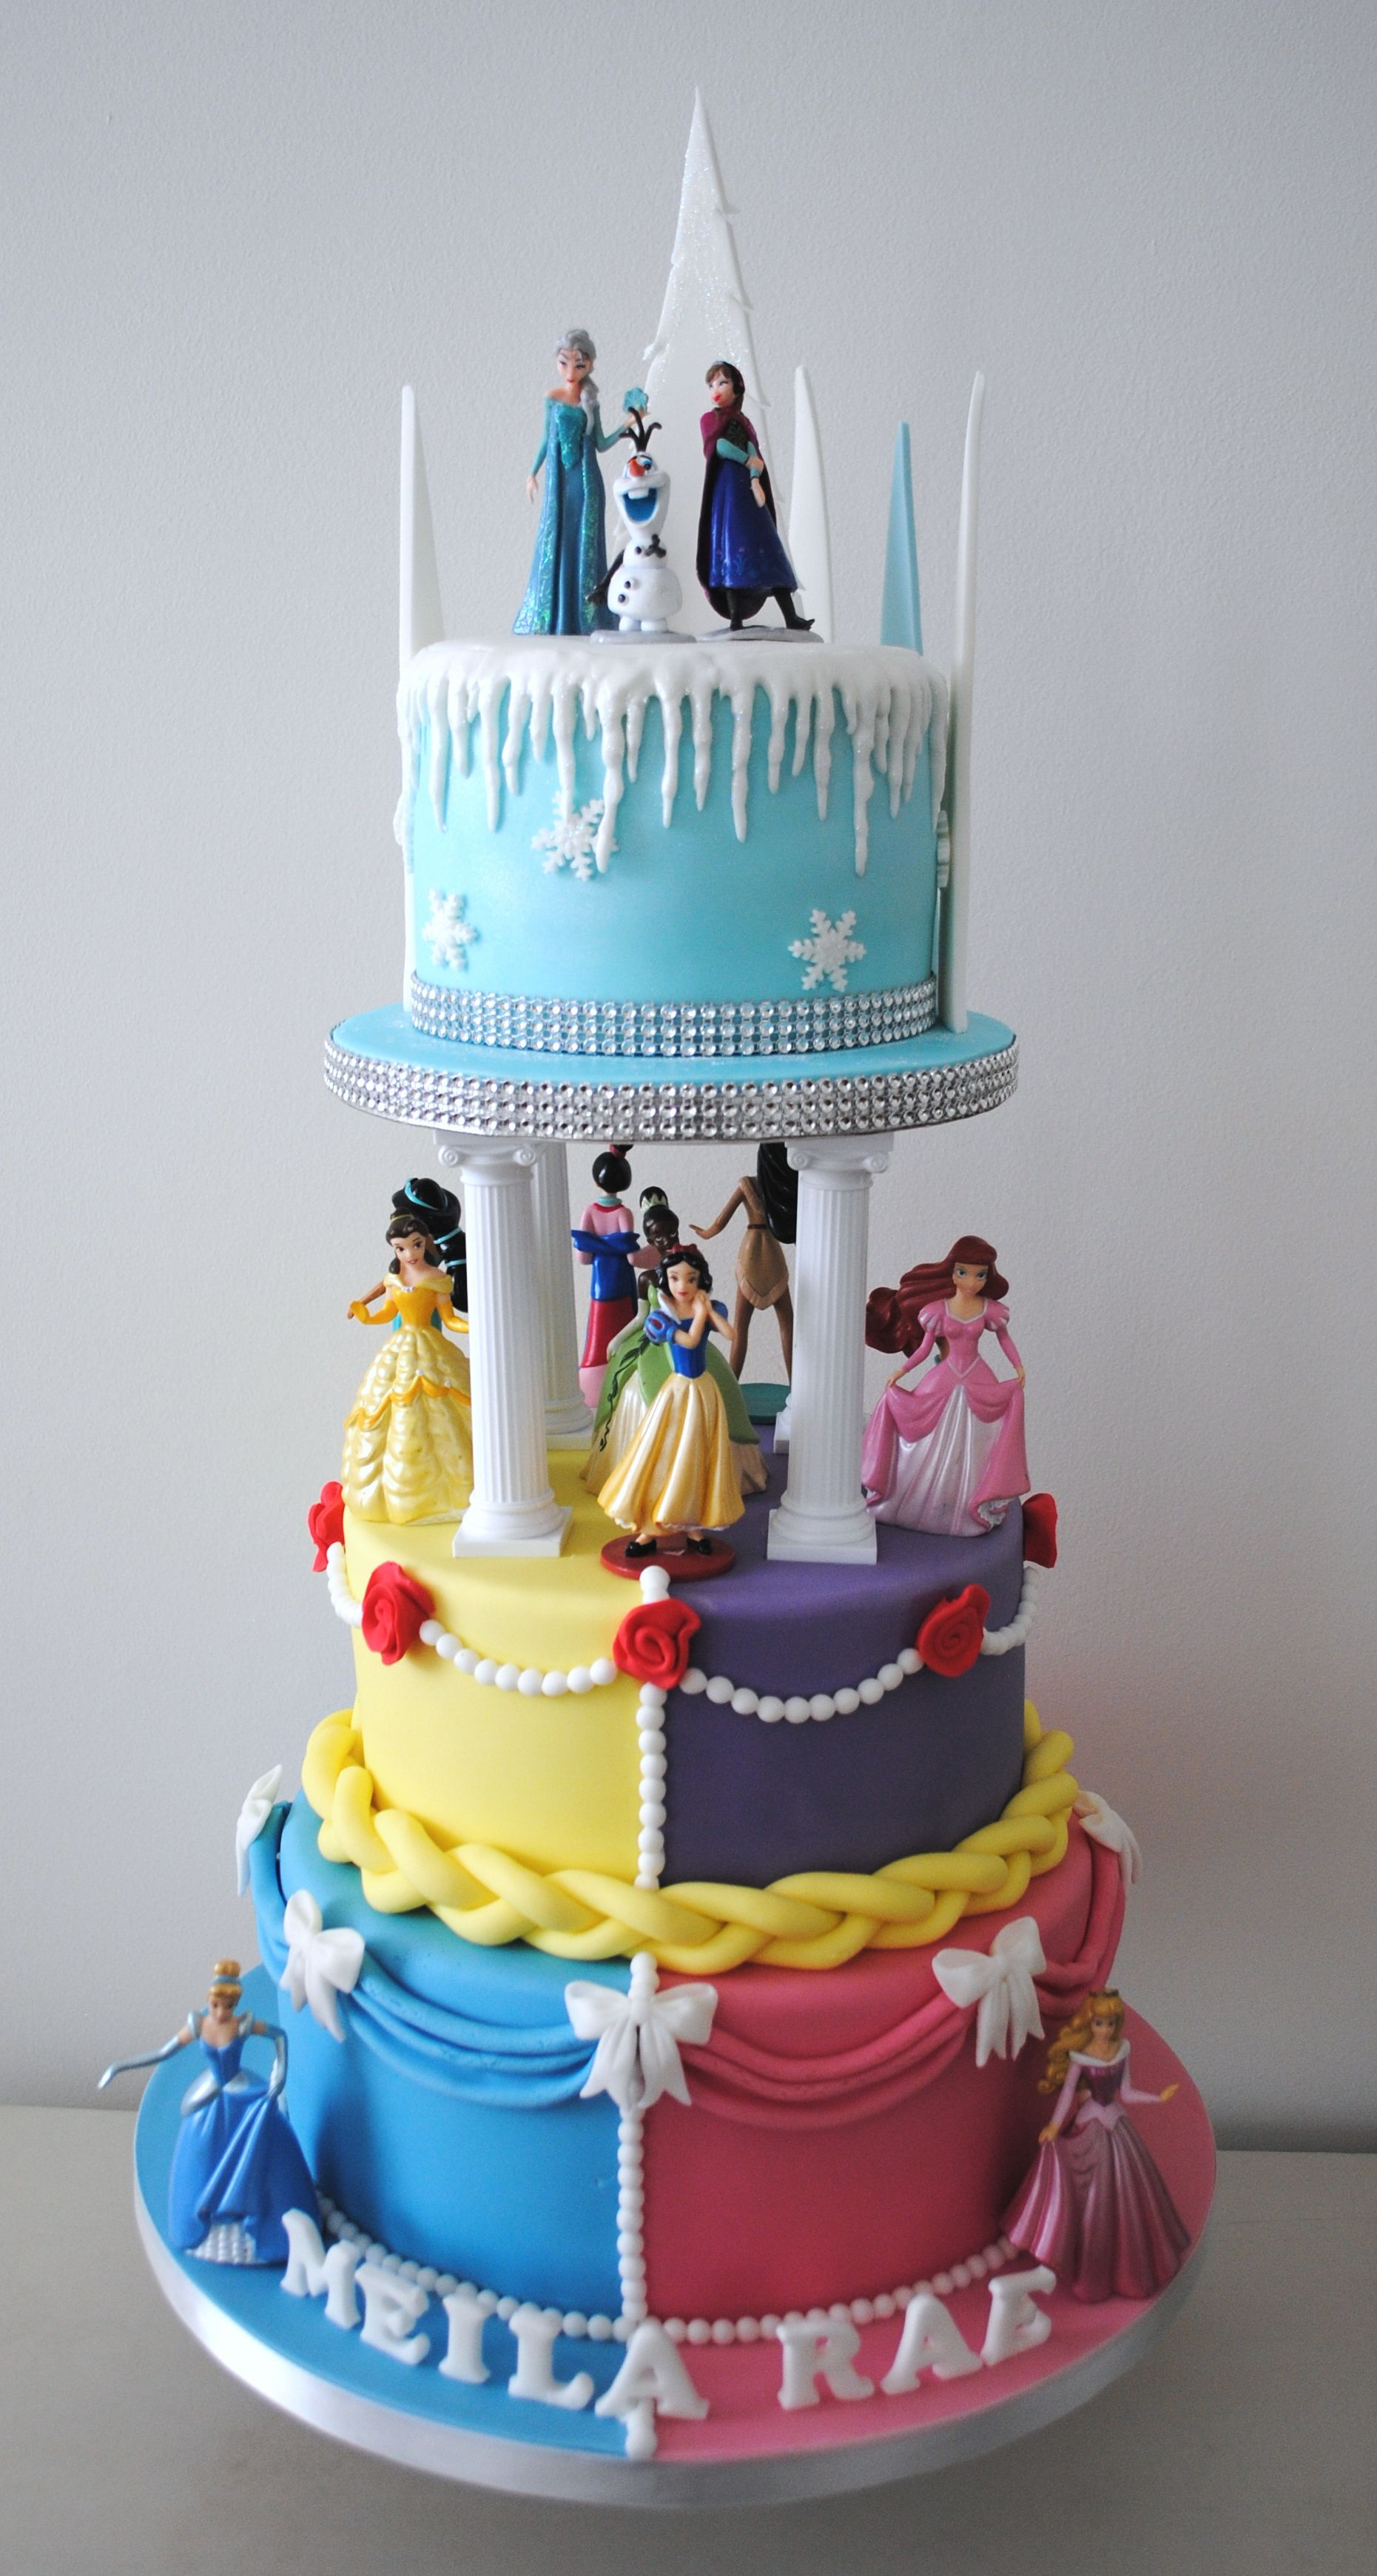 Disney Birthday Cakes Disney Princess 3 Tiered Birthday Cake Cakes Pinterest Kuchen